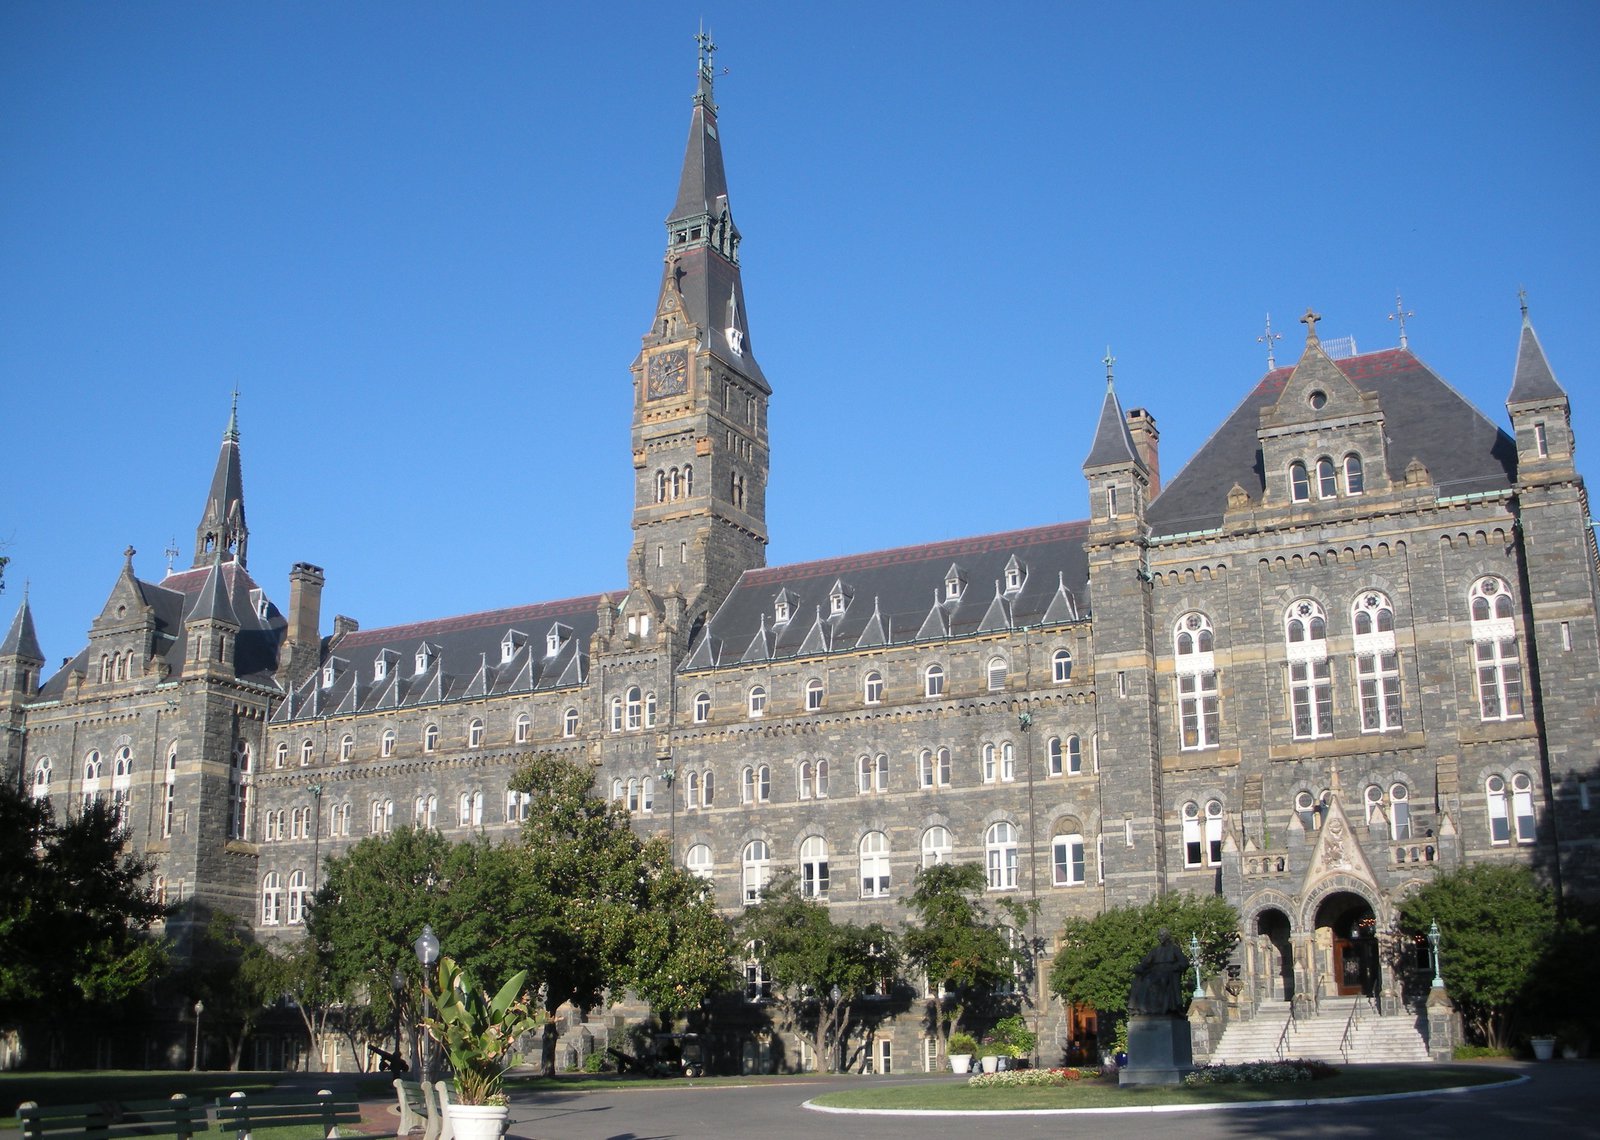 Georgetown University Healy Hall by rlkitterman on